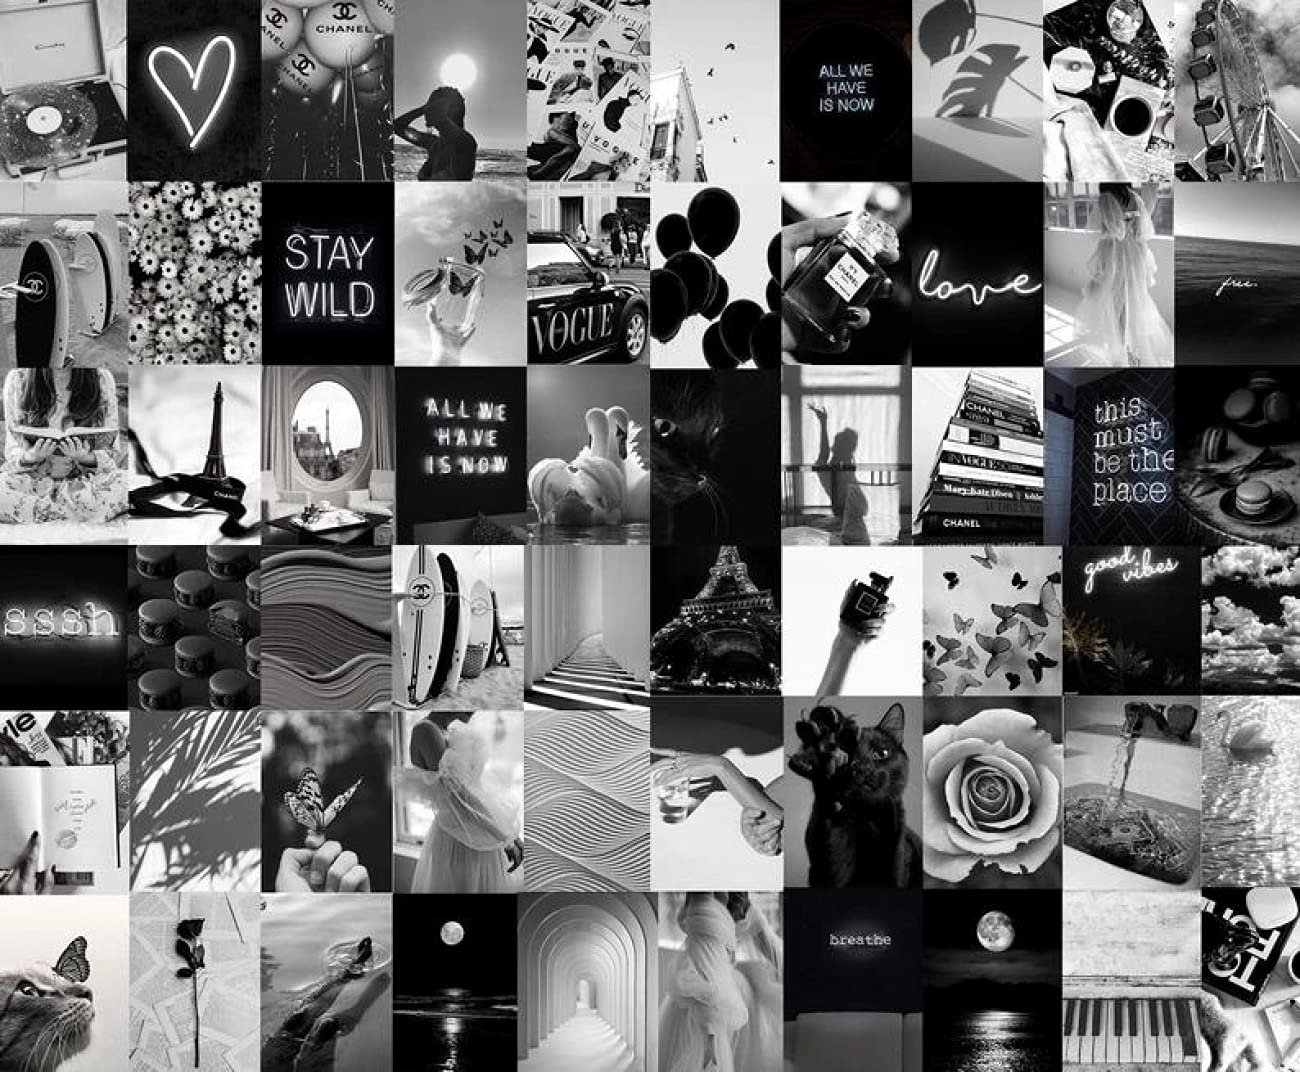  Grau Hintergrundbild 1300x1072. Amazon.de: Aesthetic Picture Wall Collage Kit Black & White Vintage Fashion Mood Board Set 60pcs Photo Wallpaper Art Prints Posters